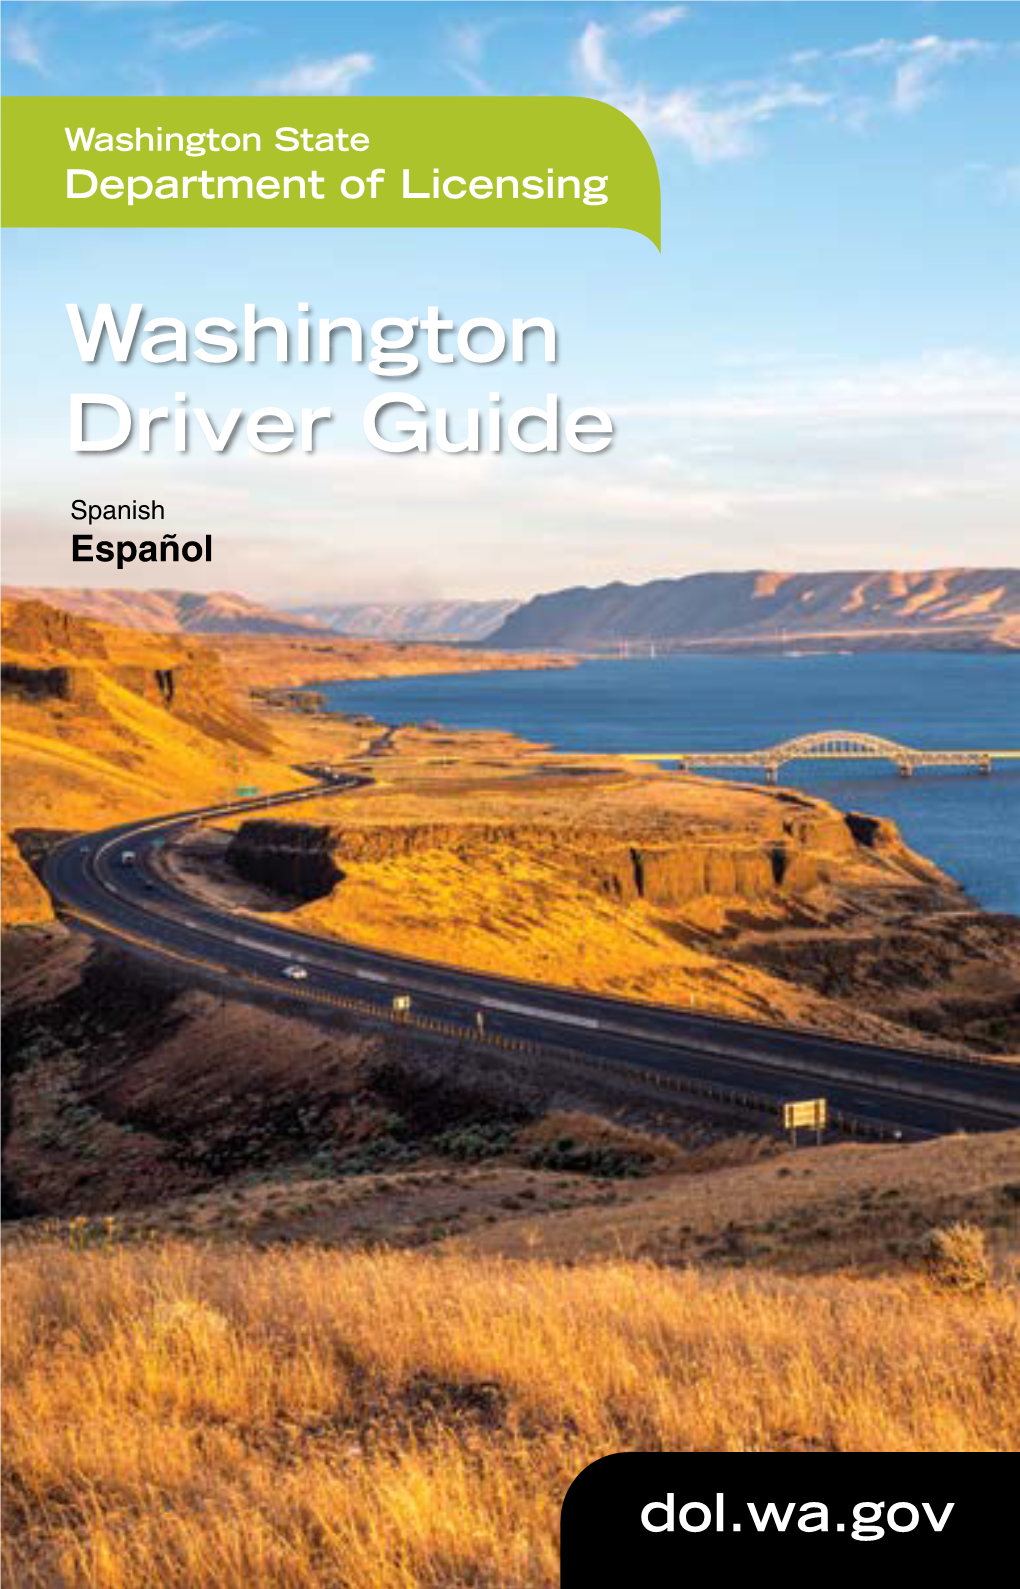 Washington State Driver Guide-Spanish